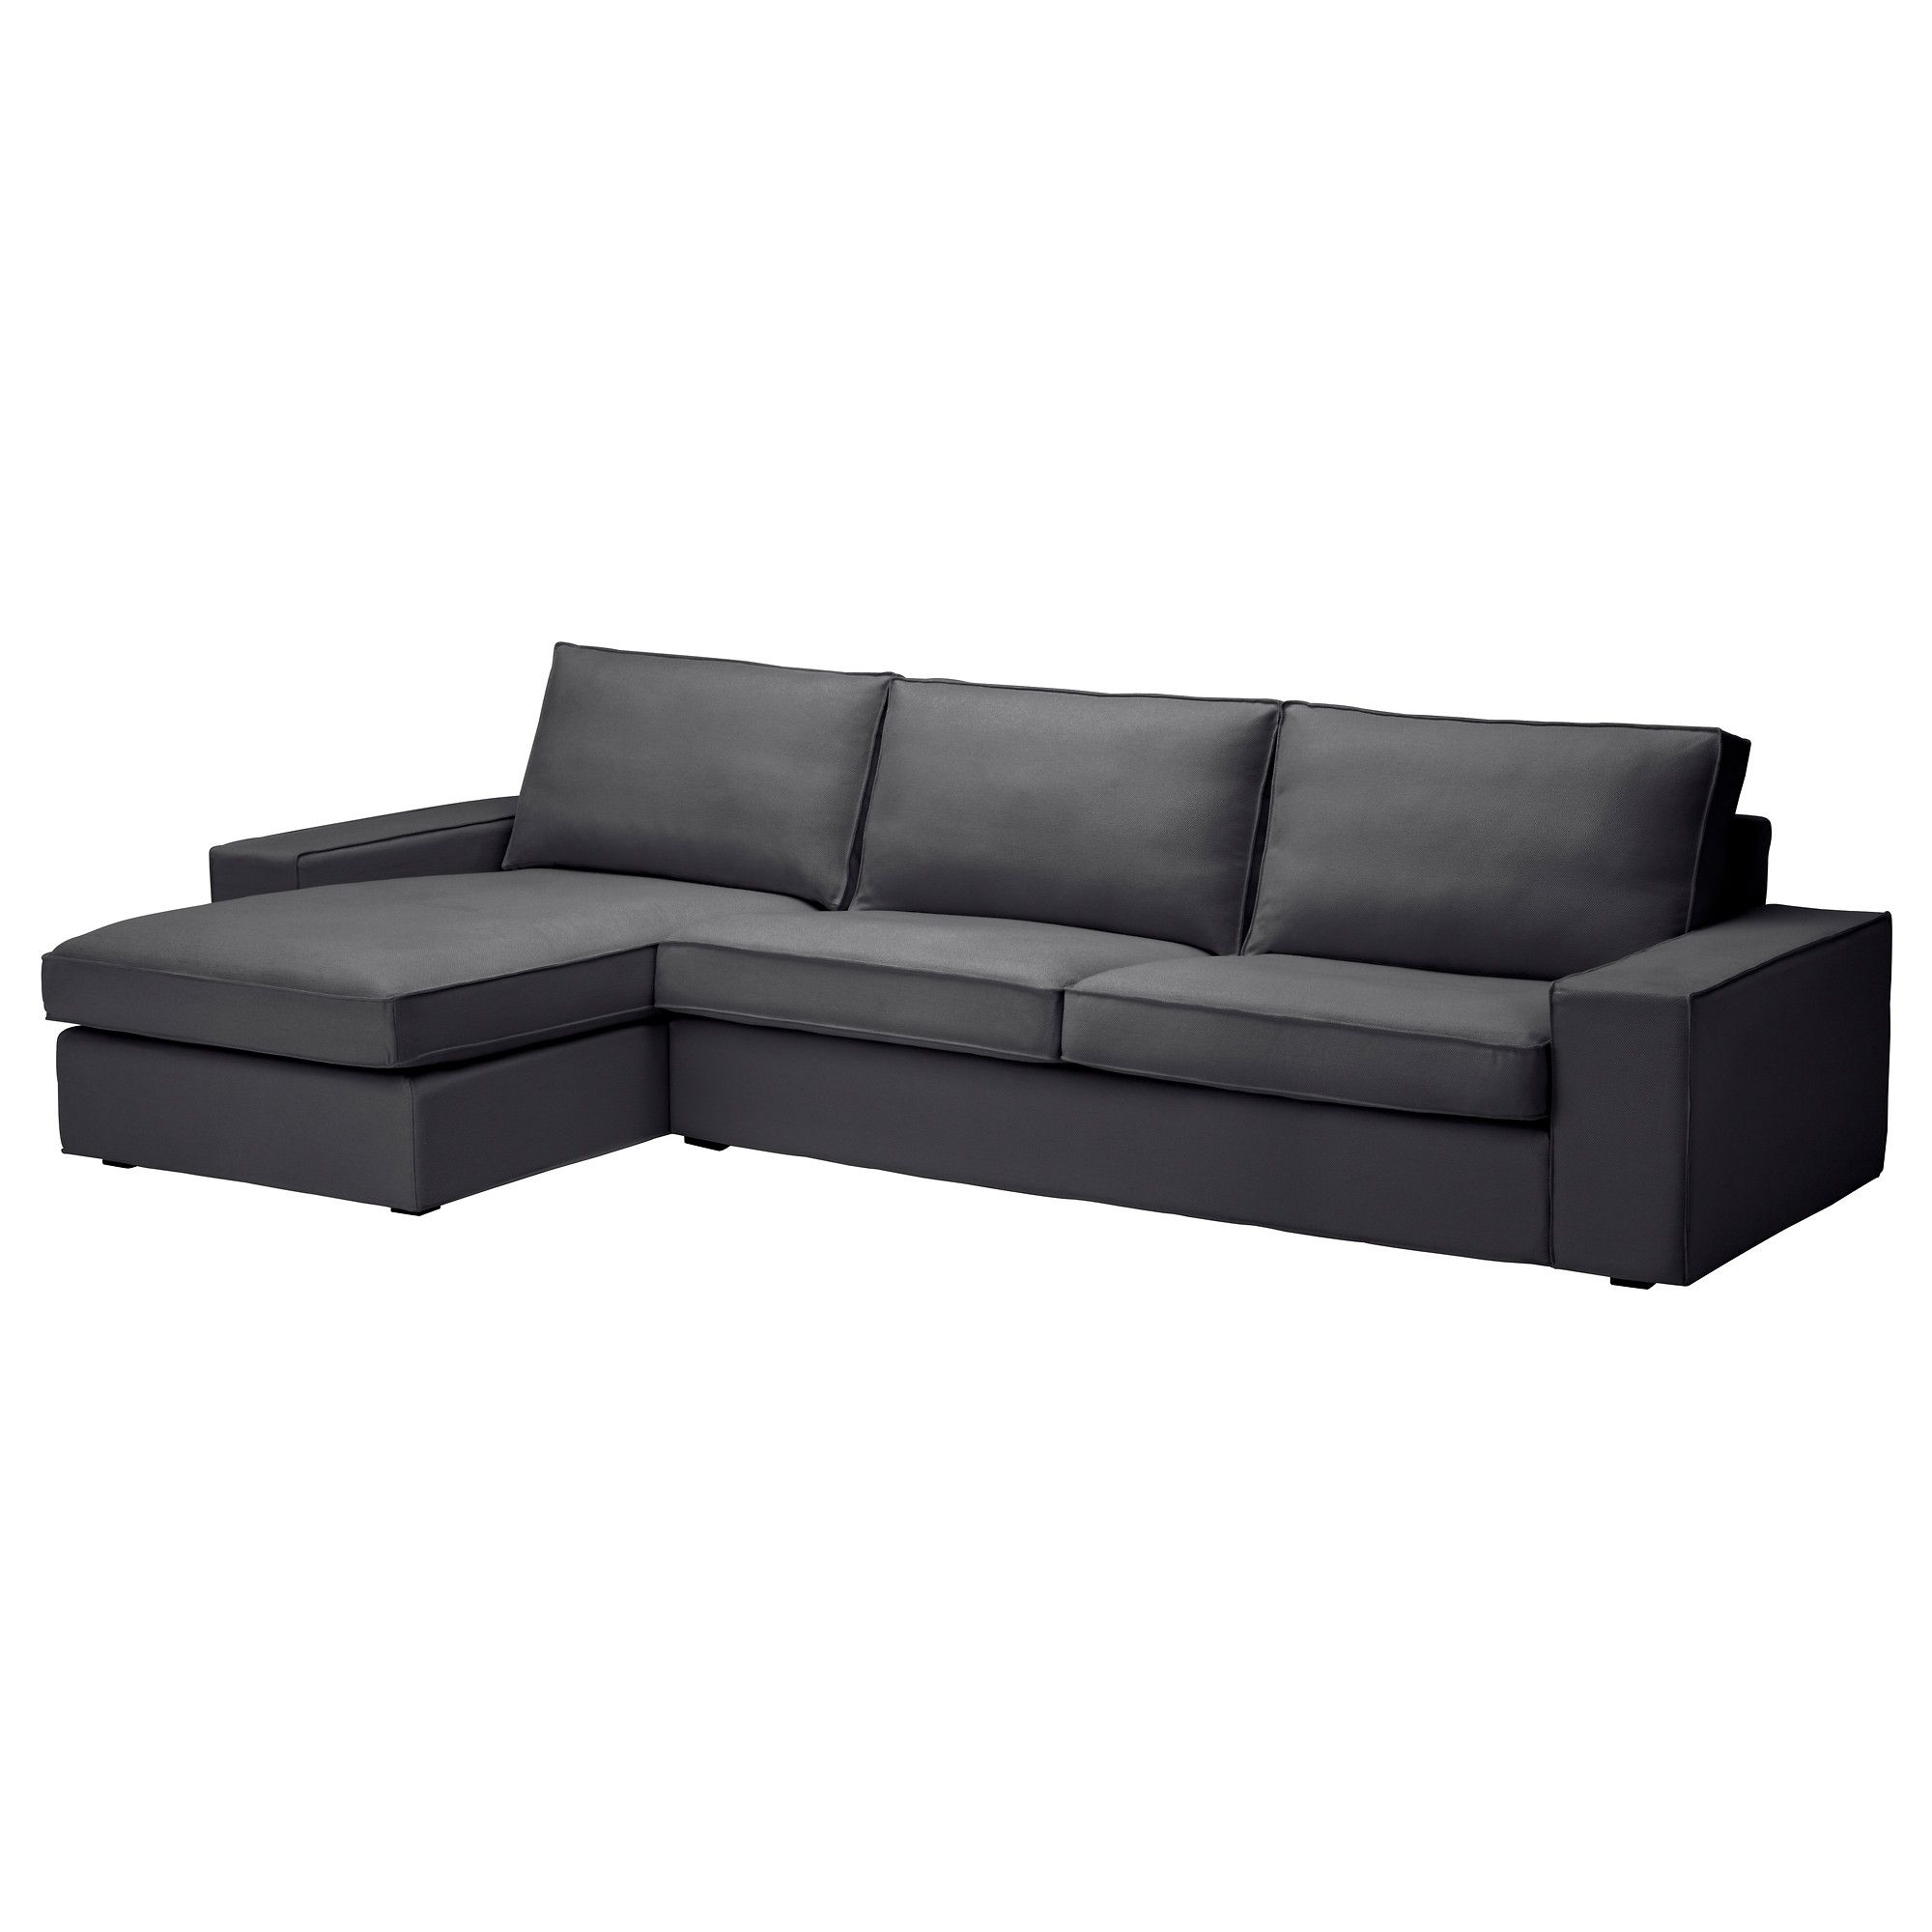 Sectional Sleeper Sofa Ikea Furniture Modern 26 – Quantiply (View 9 of 10)